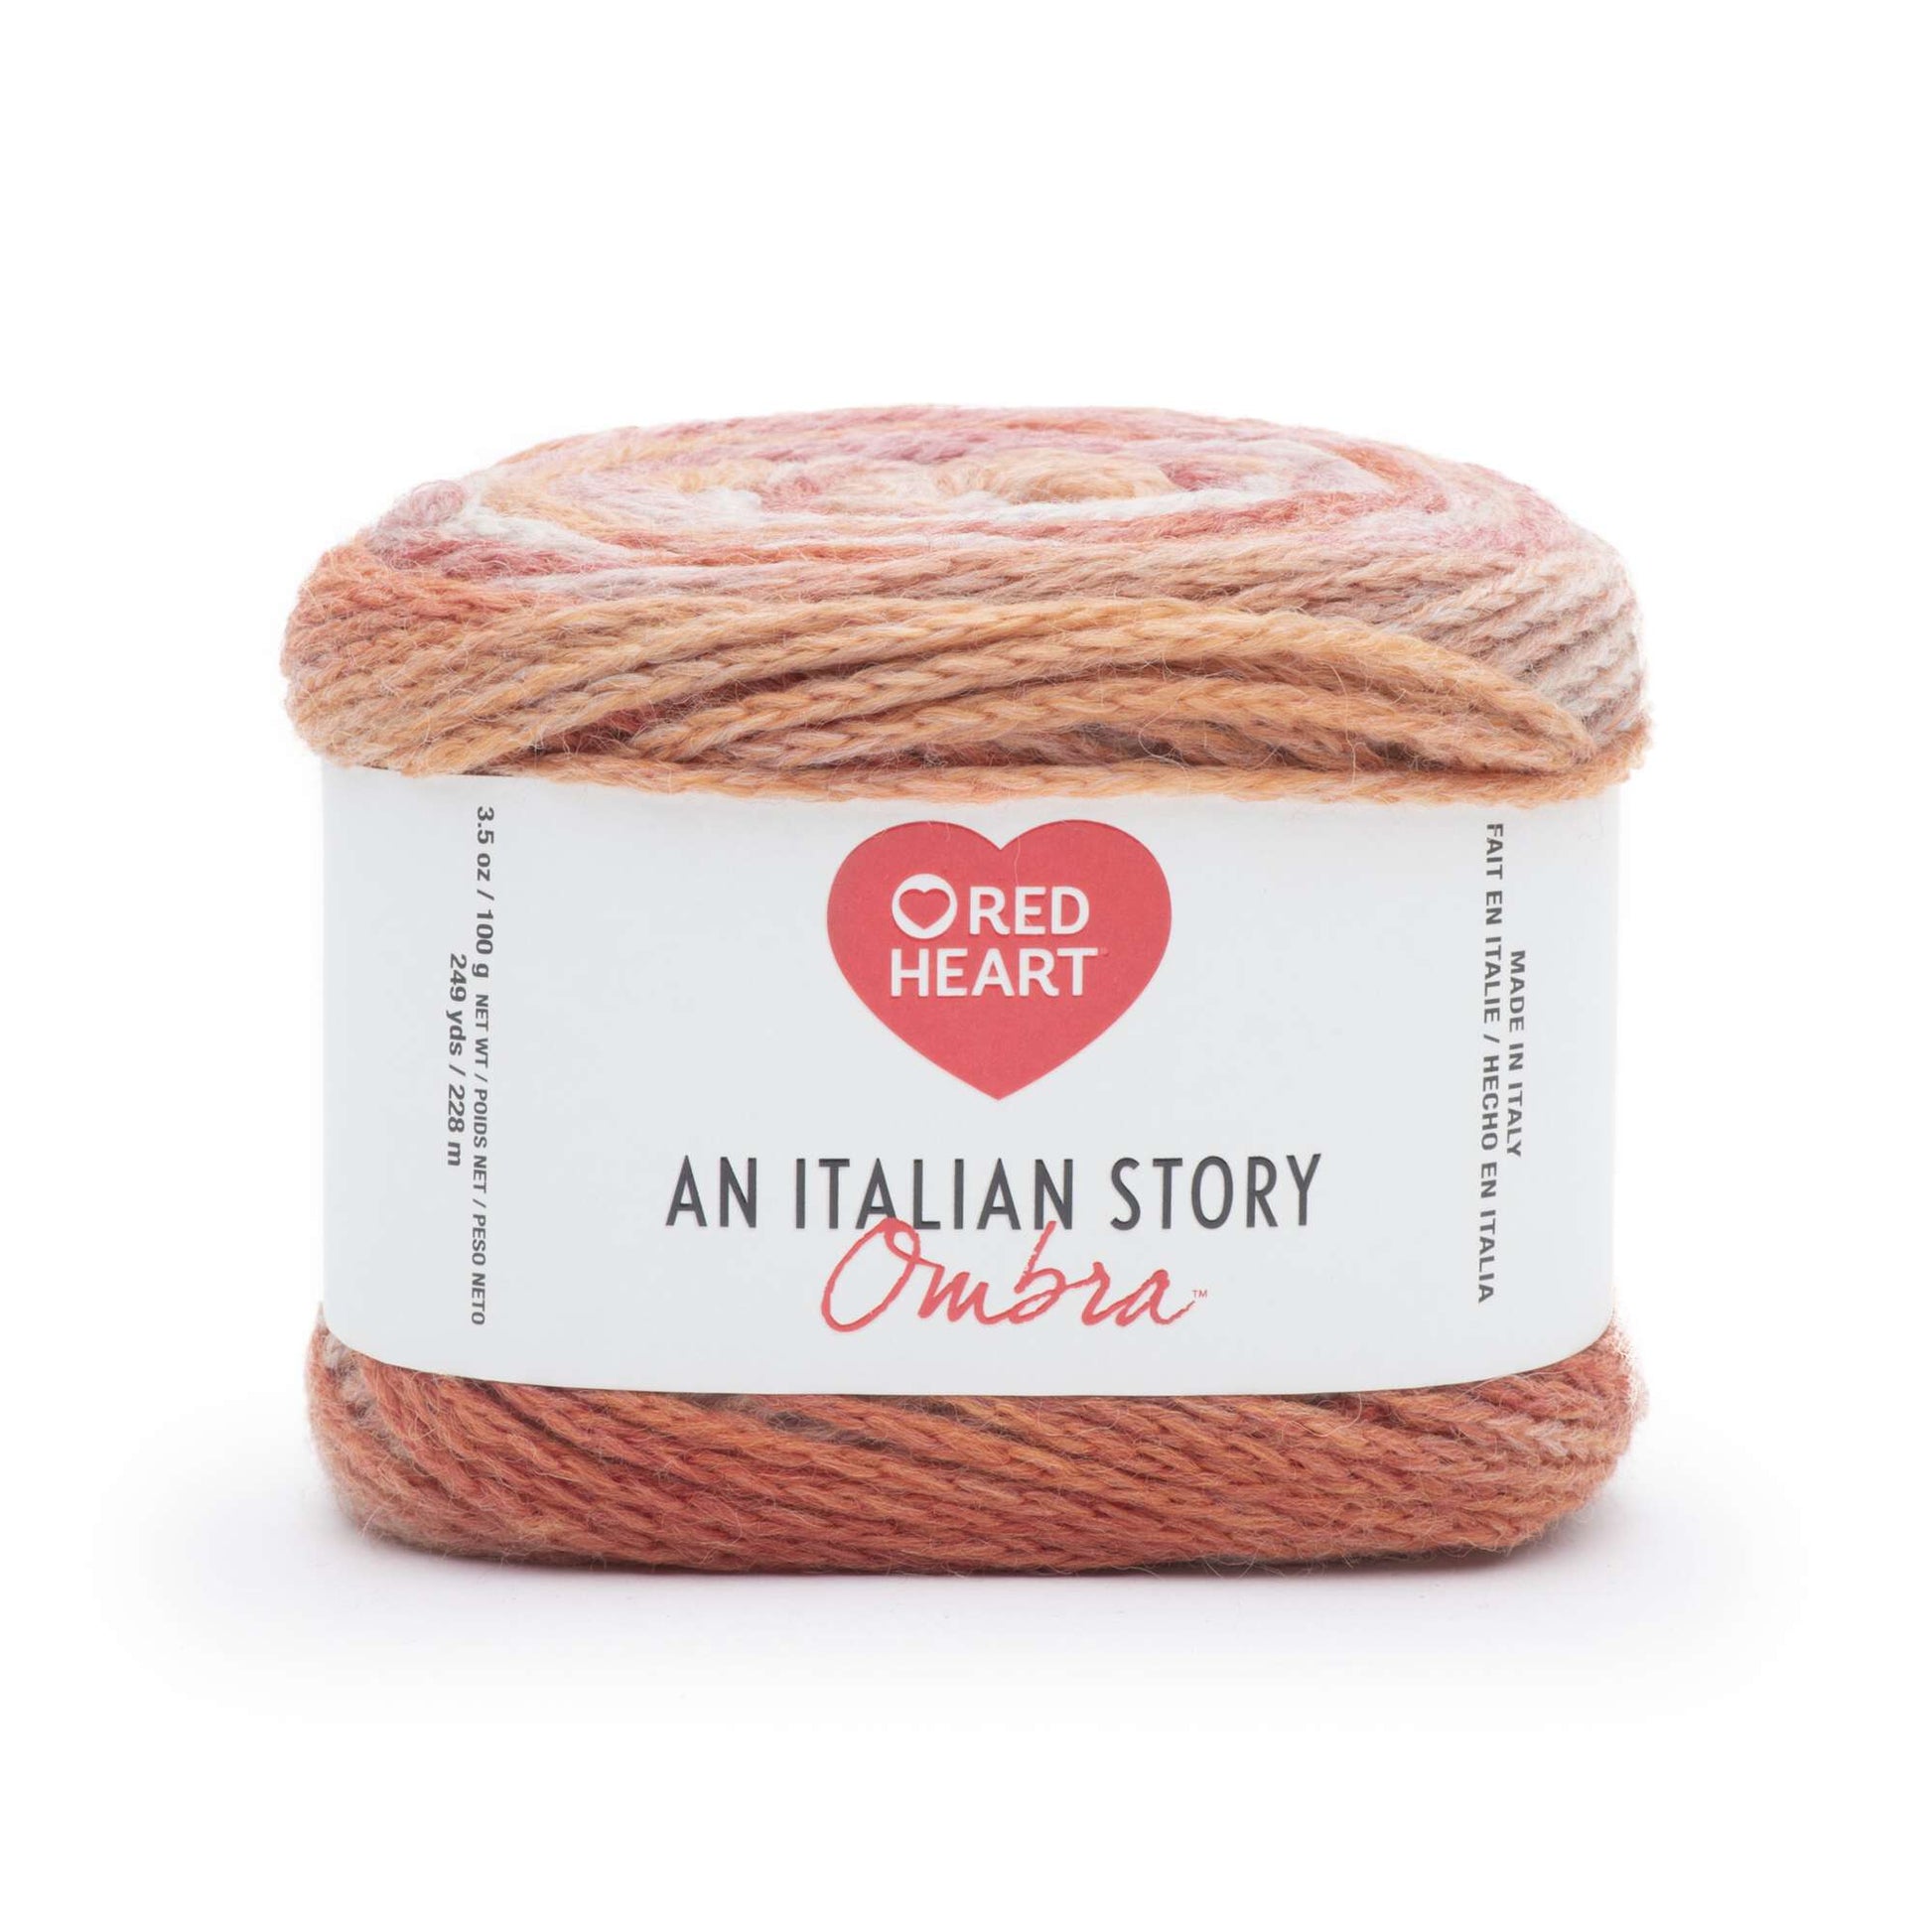 Yarn Love: Red Heart An Italian Story Ombra - Video Yarn Review on